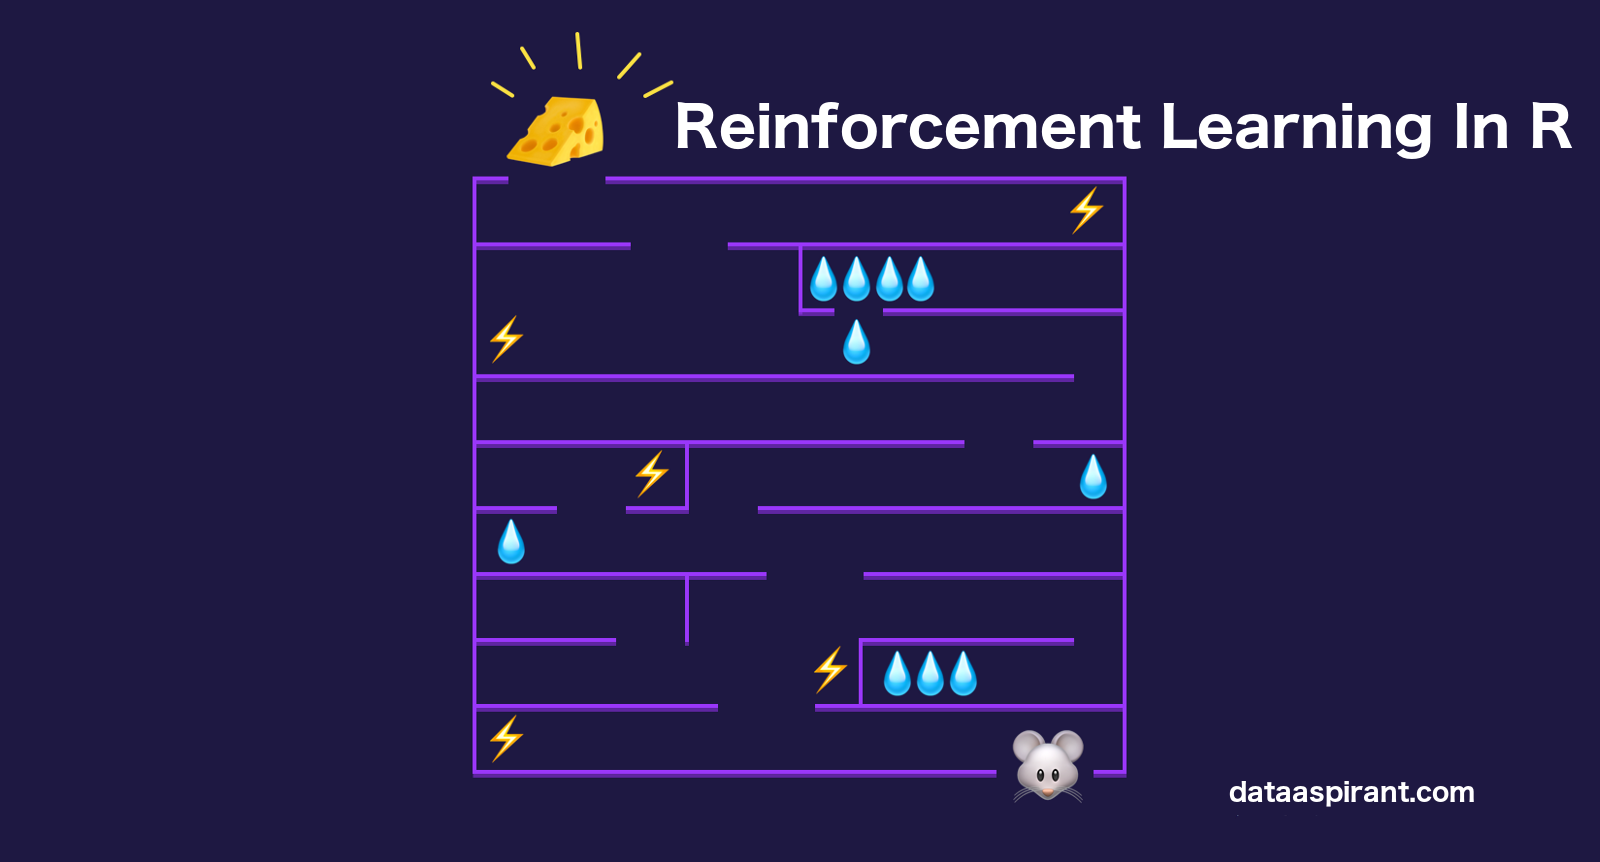 Reinforcement learning in R